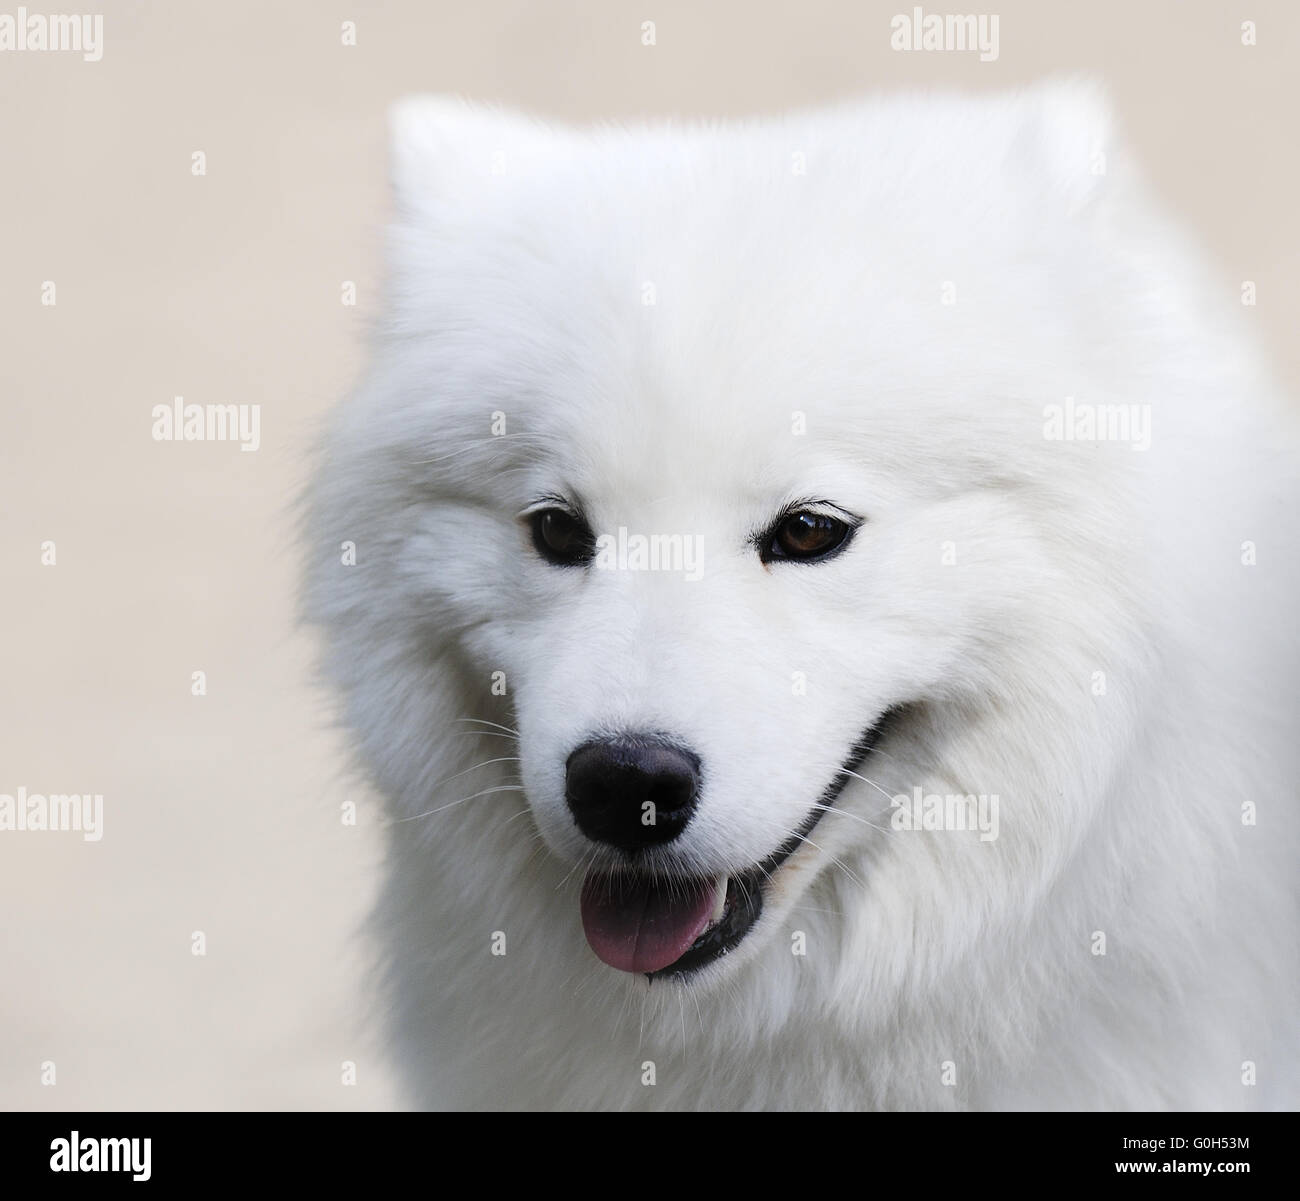 White spitz dog portrait over blurry background Stock Photo